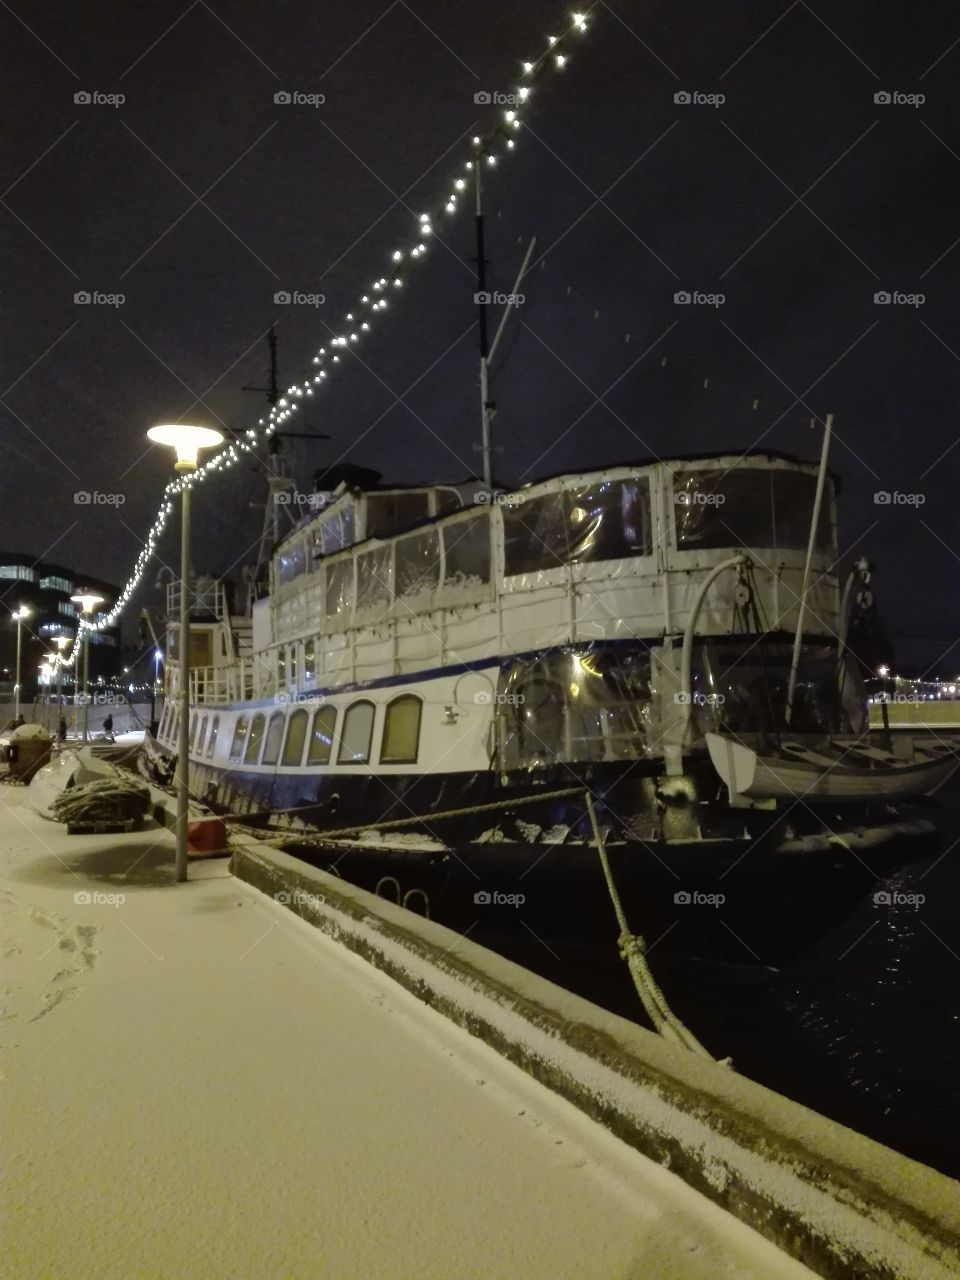 winter boat